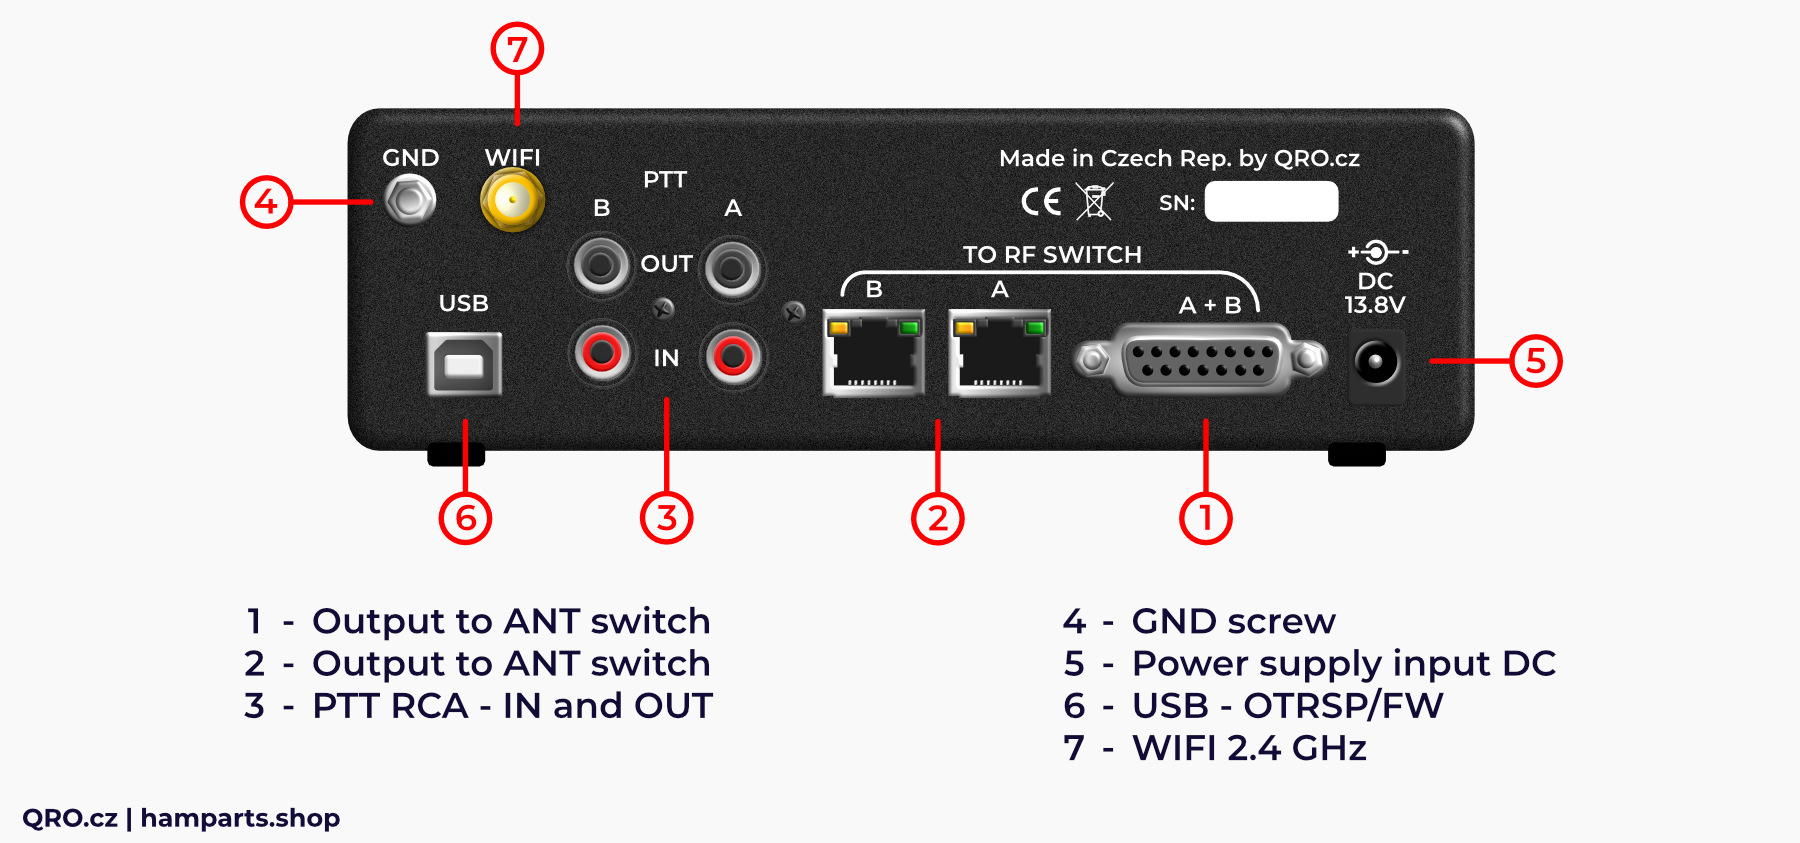 6-2 easy controller description rear panel classic version qro.cz hamparts.shop